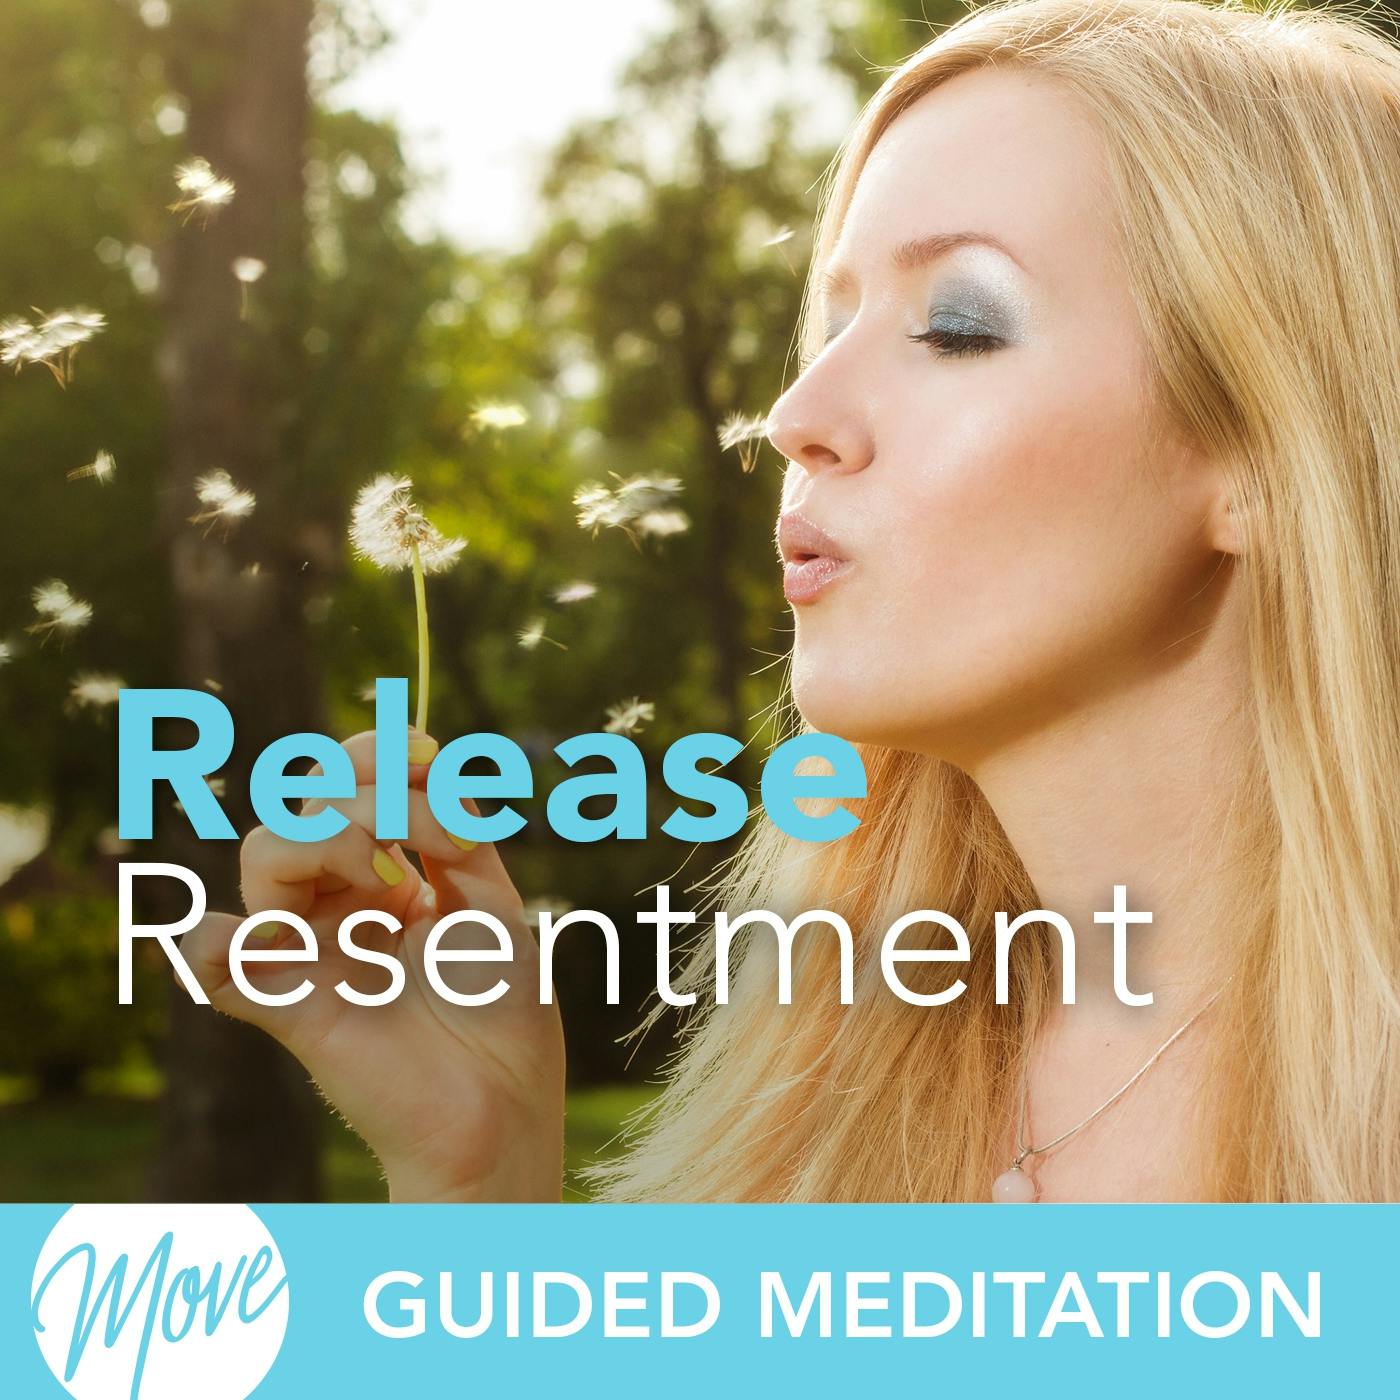 Release Resentment - Amy Applebaum